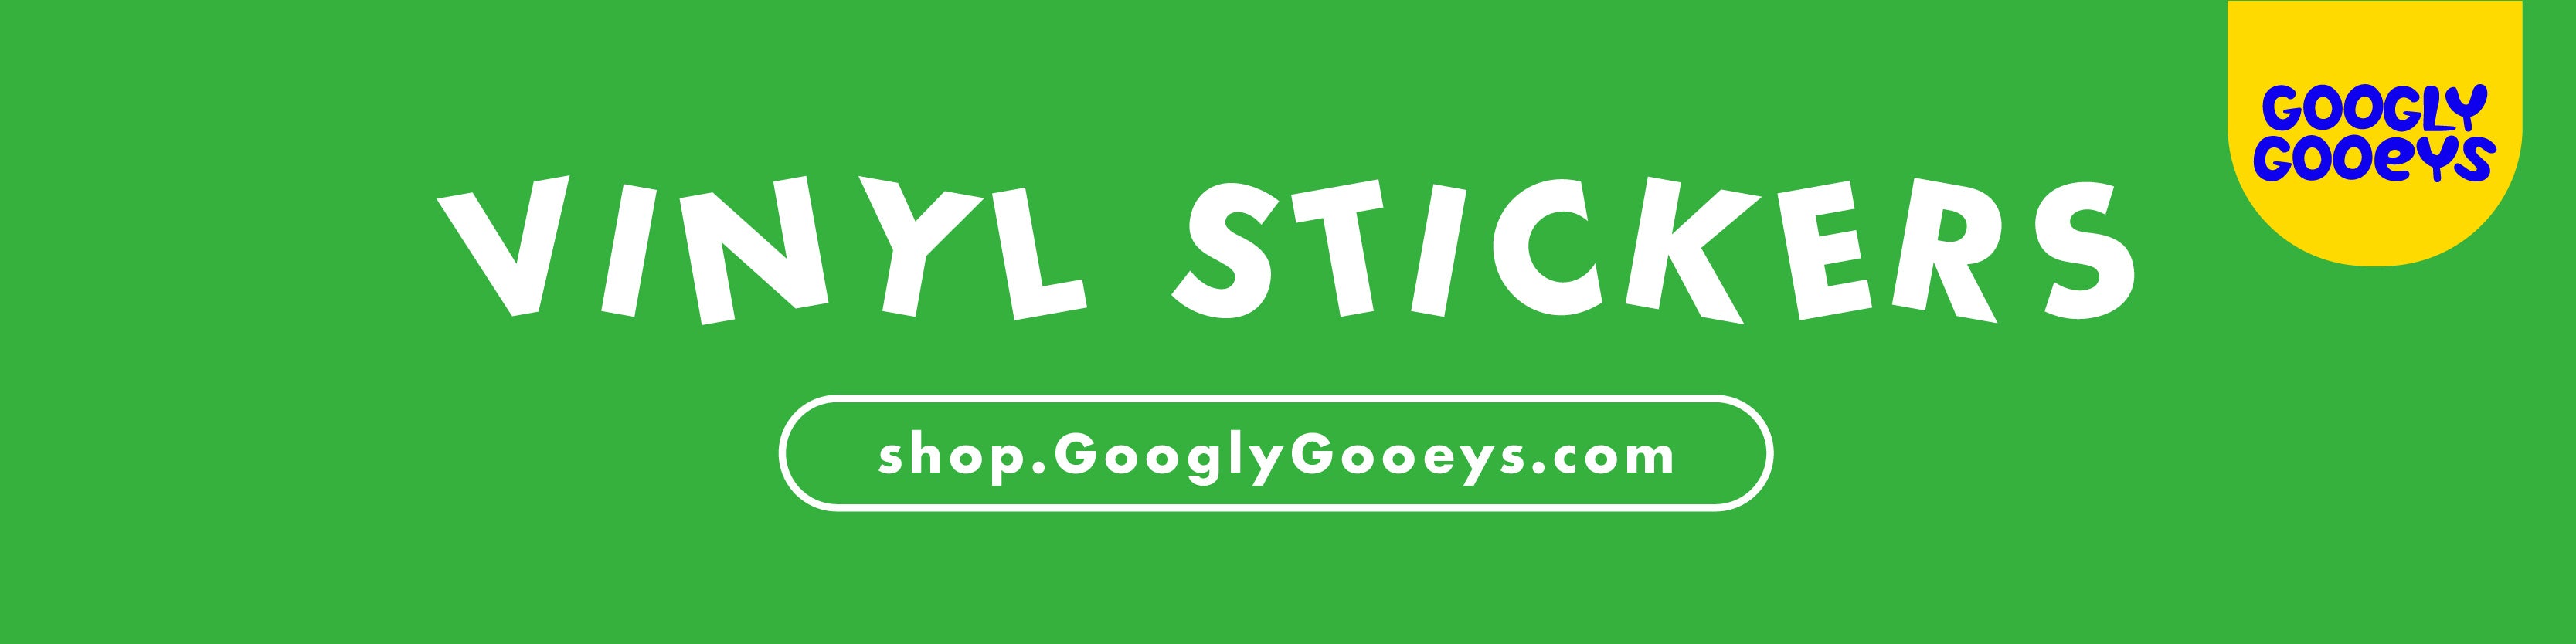 Googly Gooeys Shop - Vinyl Stickers Teckwrap Oracal Cricut